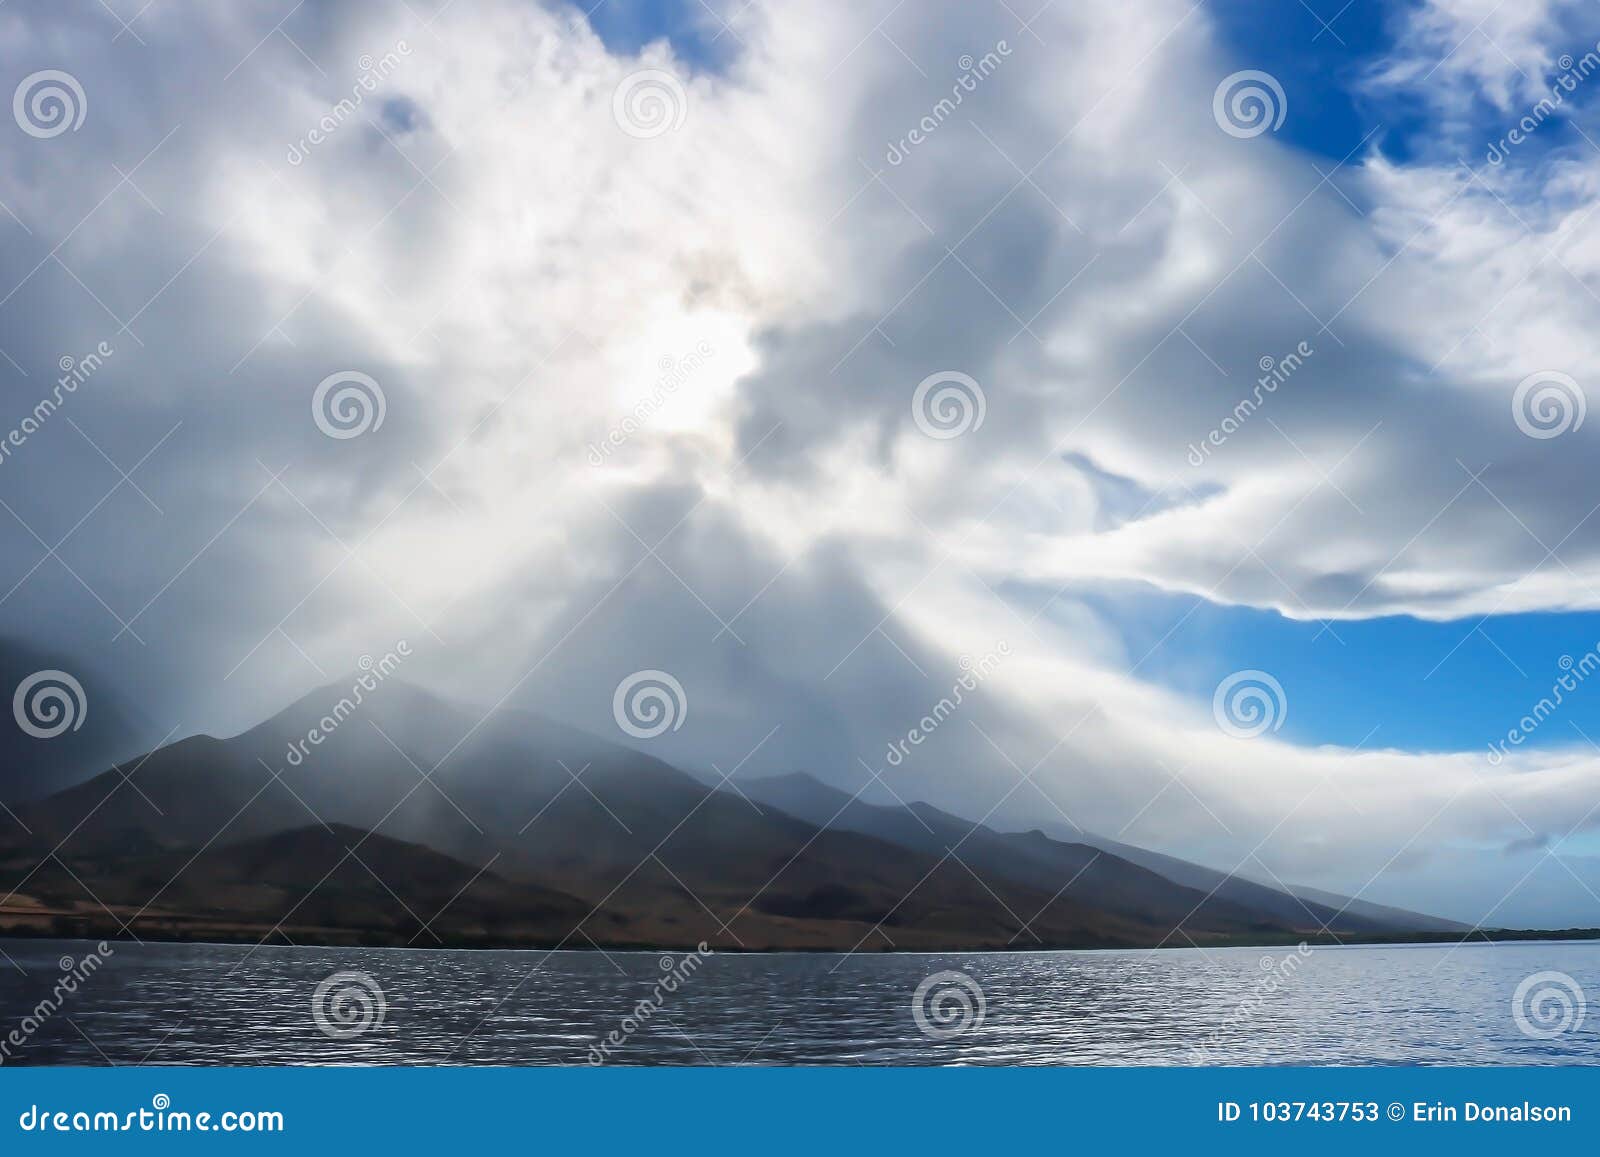 Angel Shaped Clouds Sopra Le Montagne E L'isola Immagine Stock ...